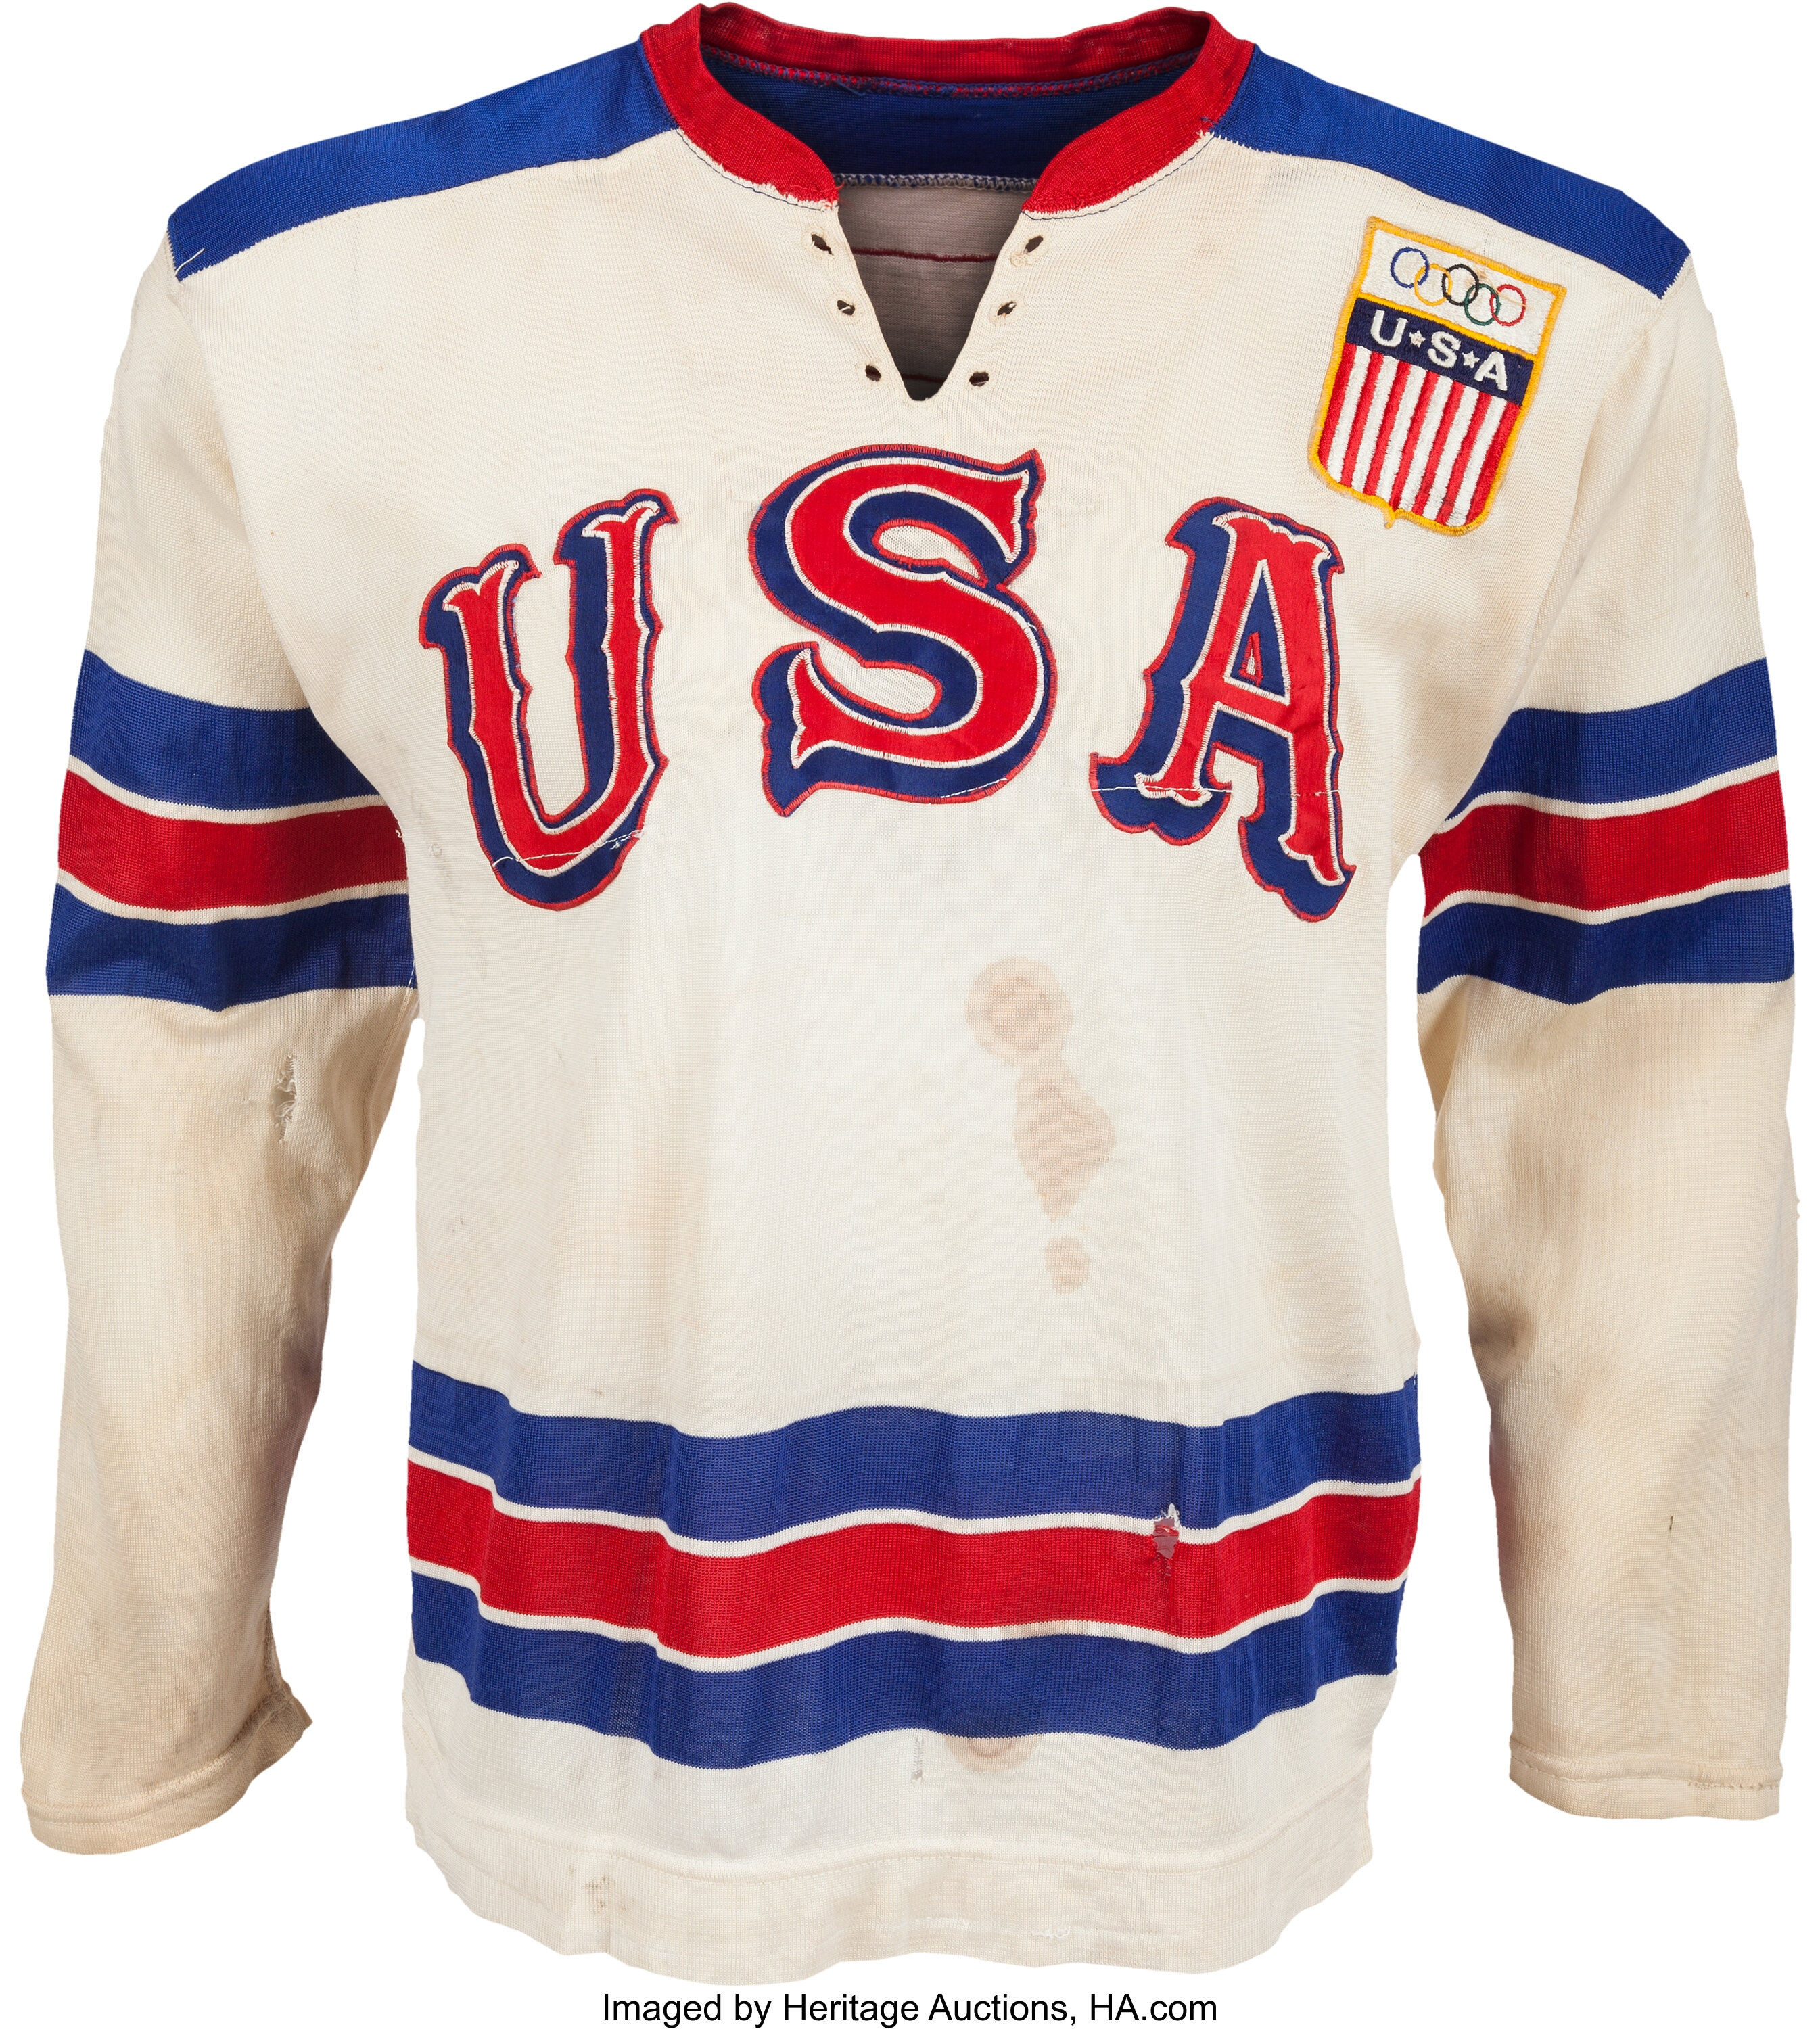 Game-Worn Olympic Hockey Jerseys Offered in USA Hockey Fundraiser